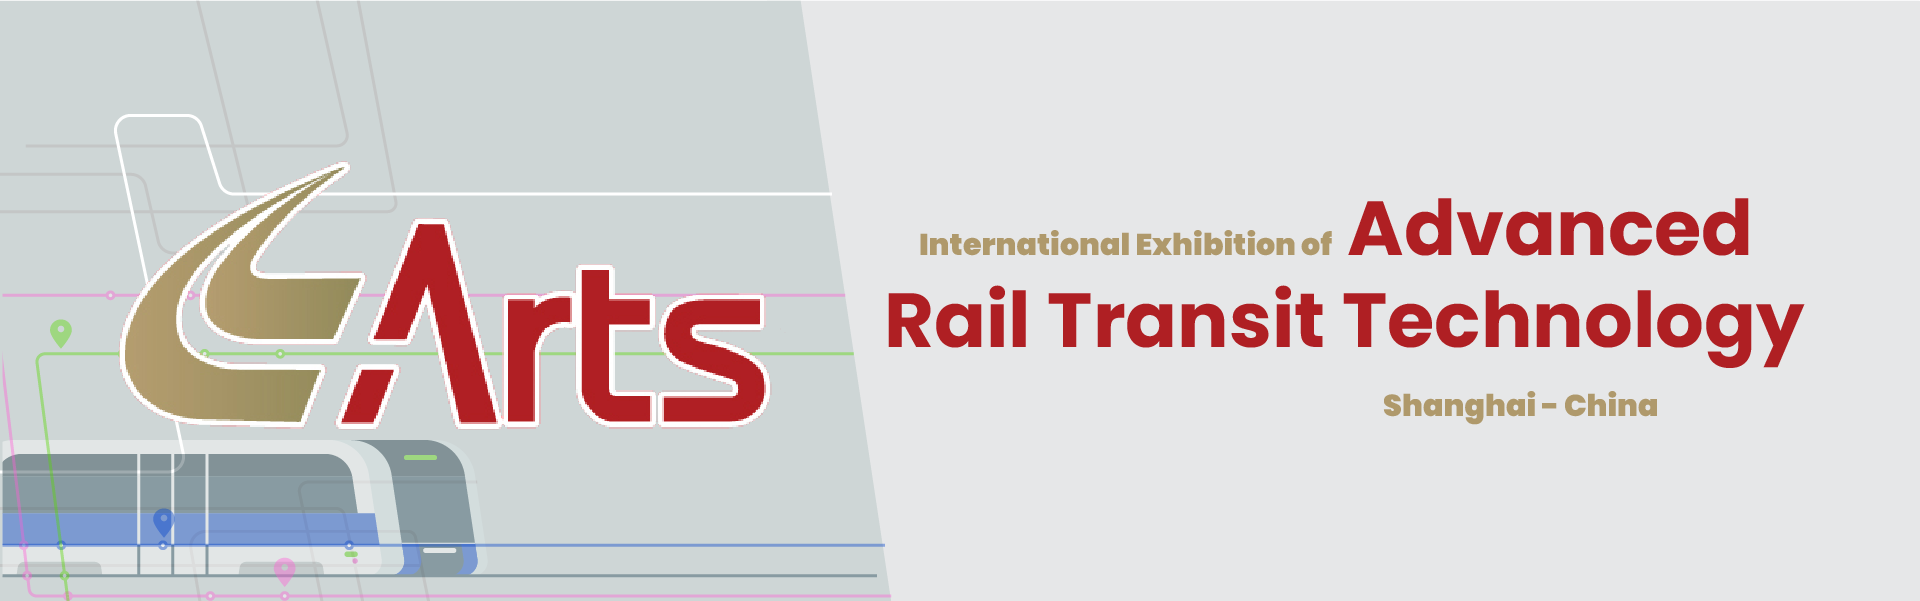 Advanced Rail Transit Technology Exhibition Shanghai China